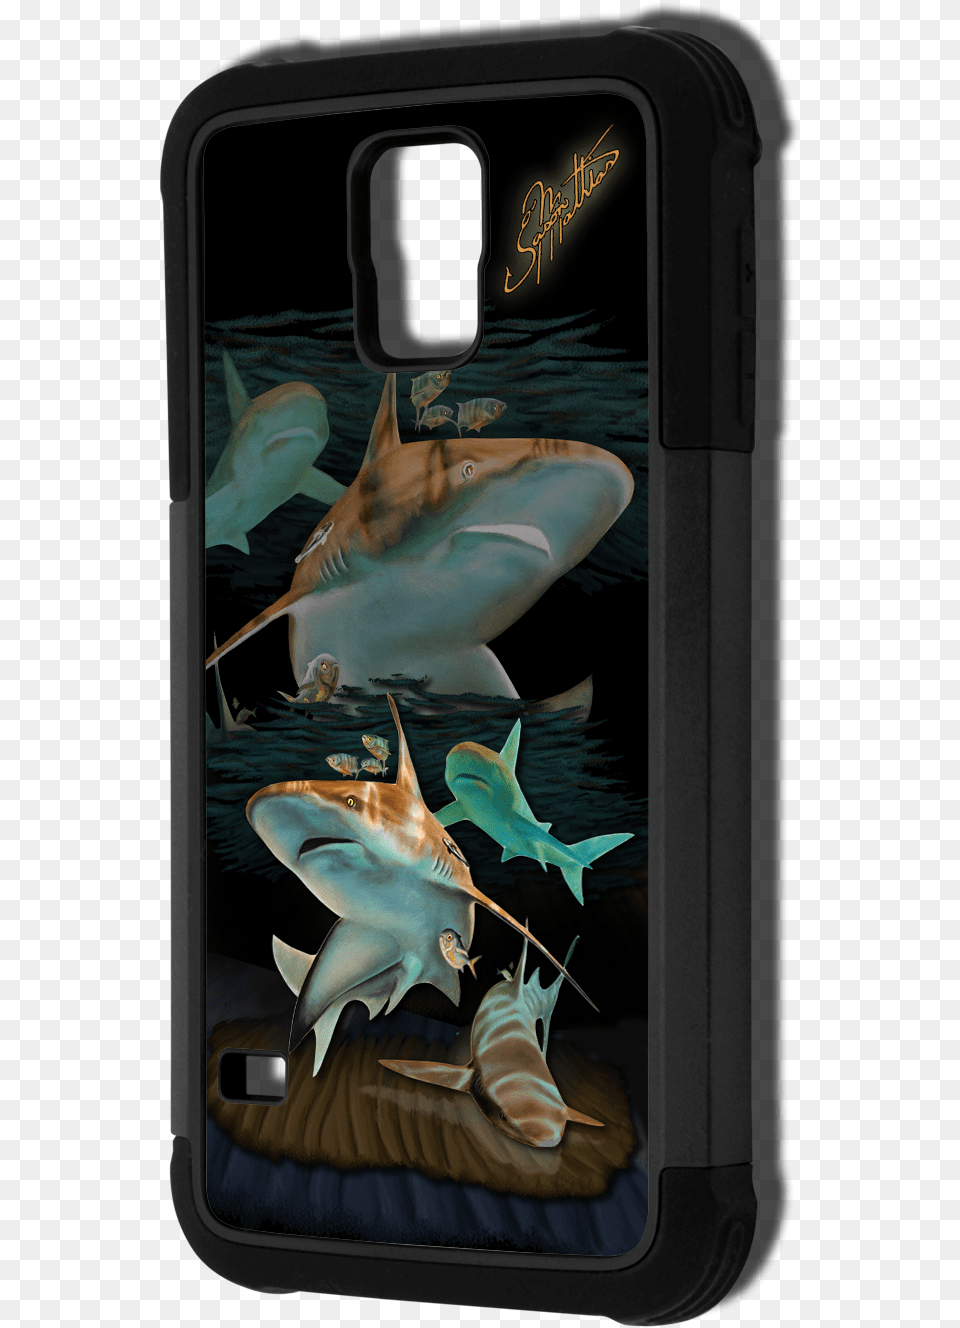 Samsung Galaxy S5 Shark Mobile Phone Case, Animal, Sea Life, Fish, Electronics Free Transparent Png